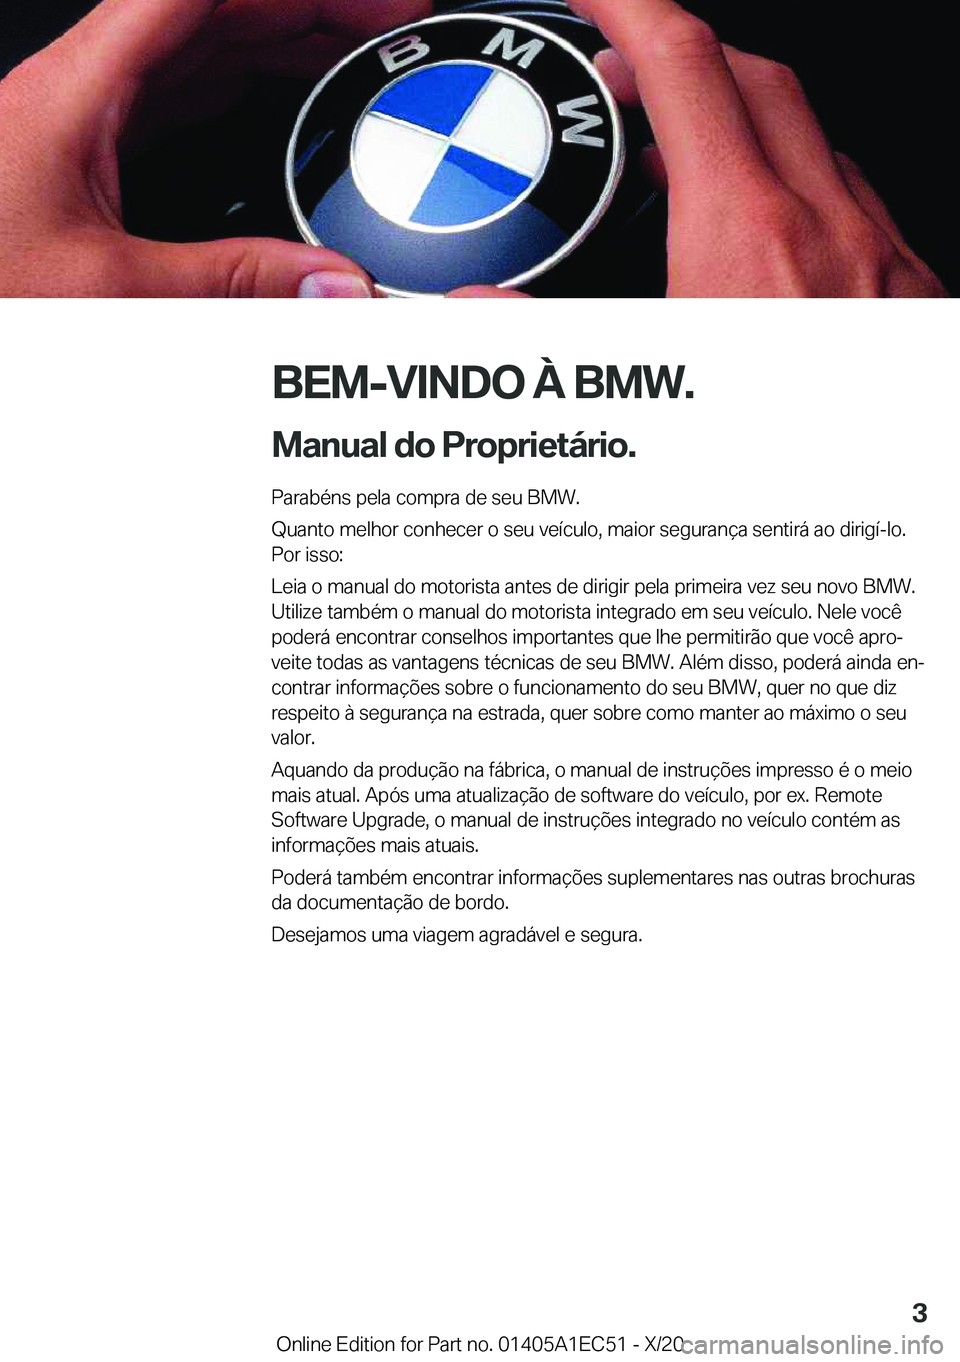 BMW 8 SERIES GRAN COUPE 2021  Manual do condutor (in Portuguese) �B�E�M�-�V�I�N�D�O��À��B�M�W�.
�M�a�n�u�a�l��d�o��P�r�o�p�r�i�e�t�á�r�i�o�. �P�a�r�a�b�é�n�s��p�e�l�a��c�o�m�p�r�a��d�e��s�e�u��B�M�W�.
�Q�u�a�n�t�o��m�e�l�h�o�r��c�o�n�h�e�c�e�r��o��s